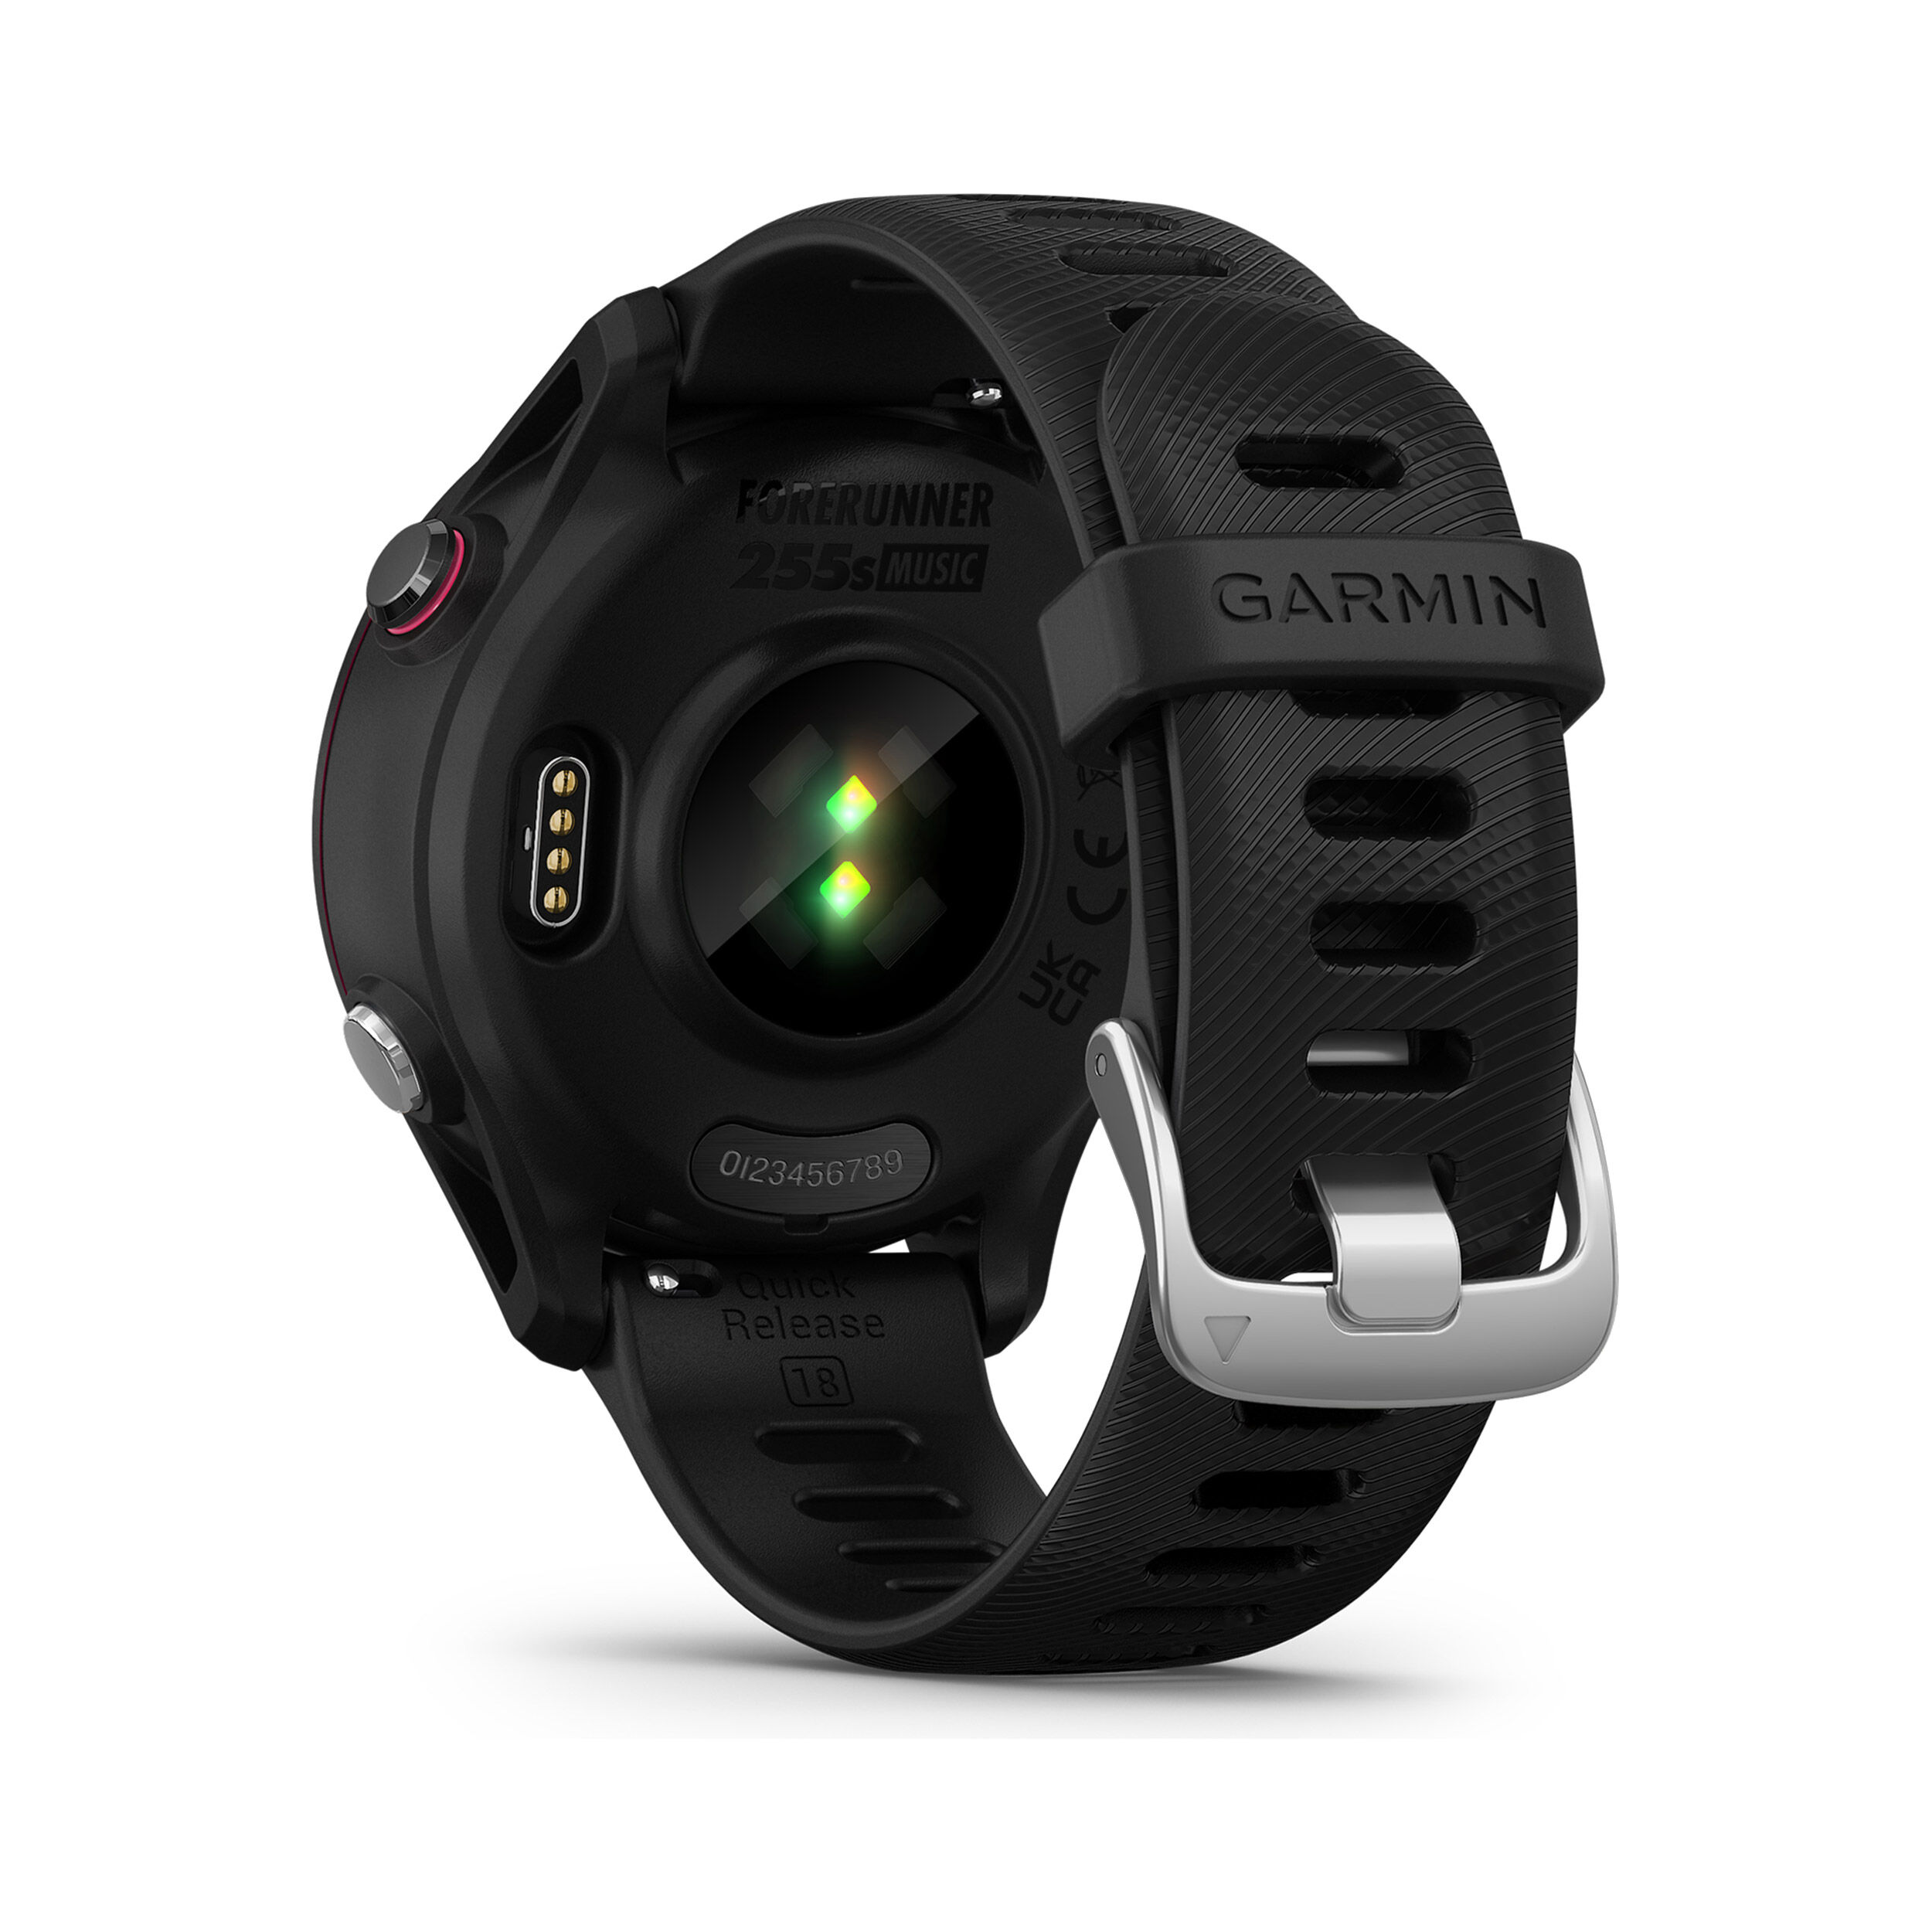 Buy Garmin Forerunner 255 S Music Pulse Watch Black online